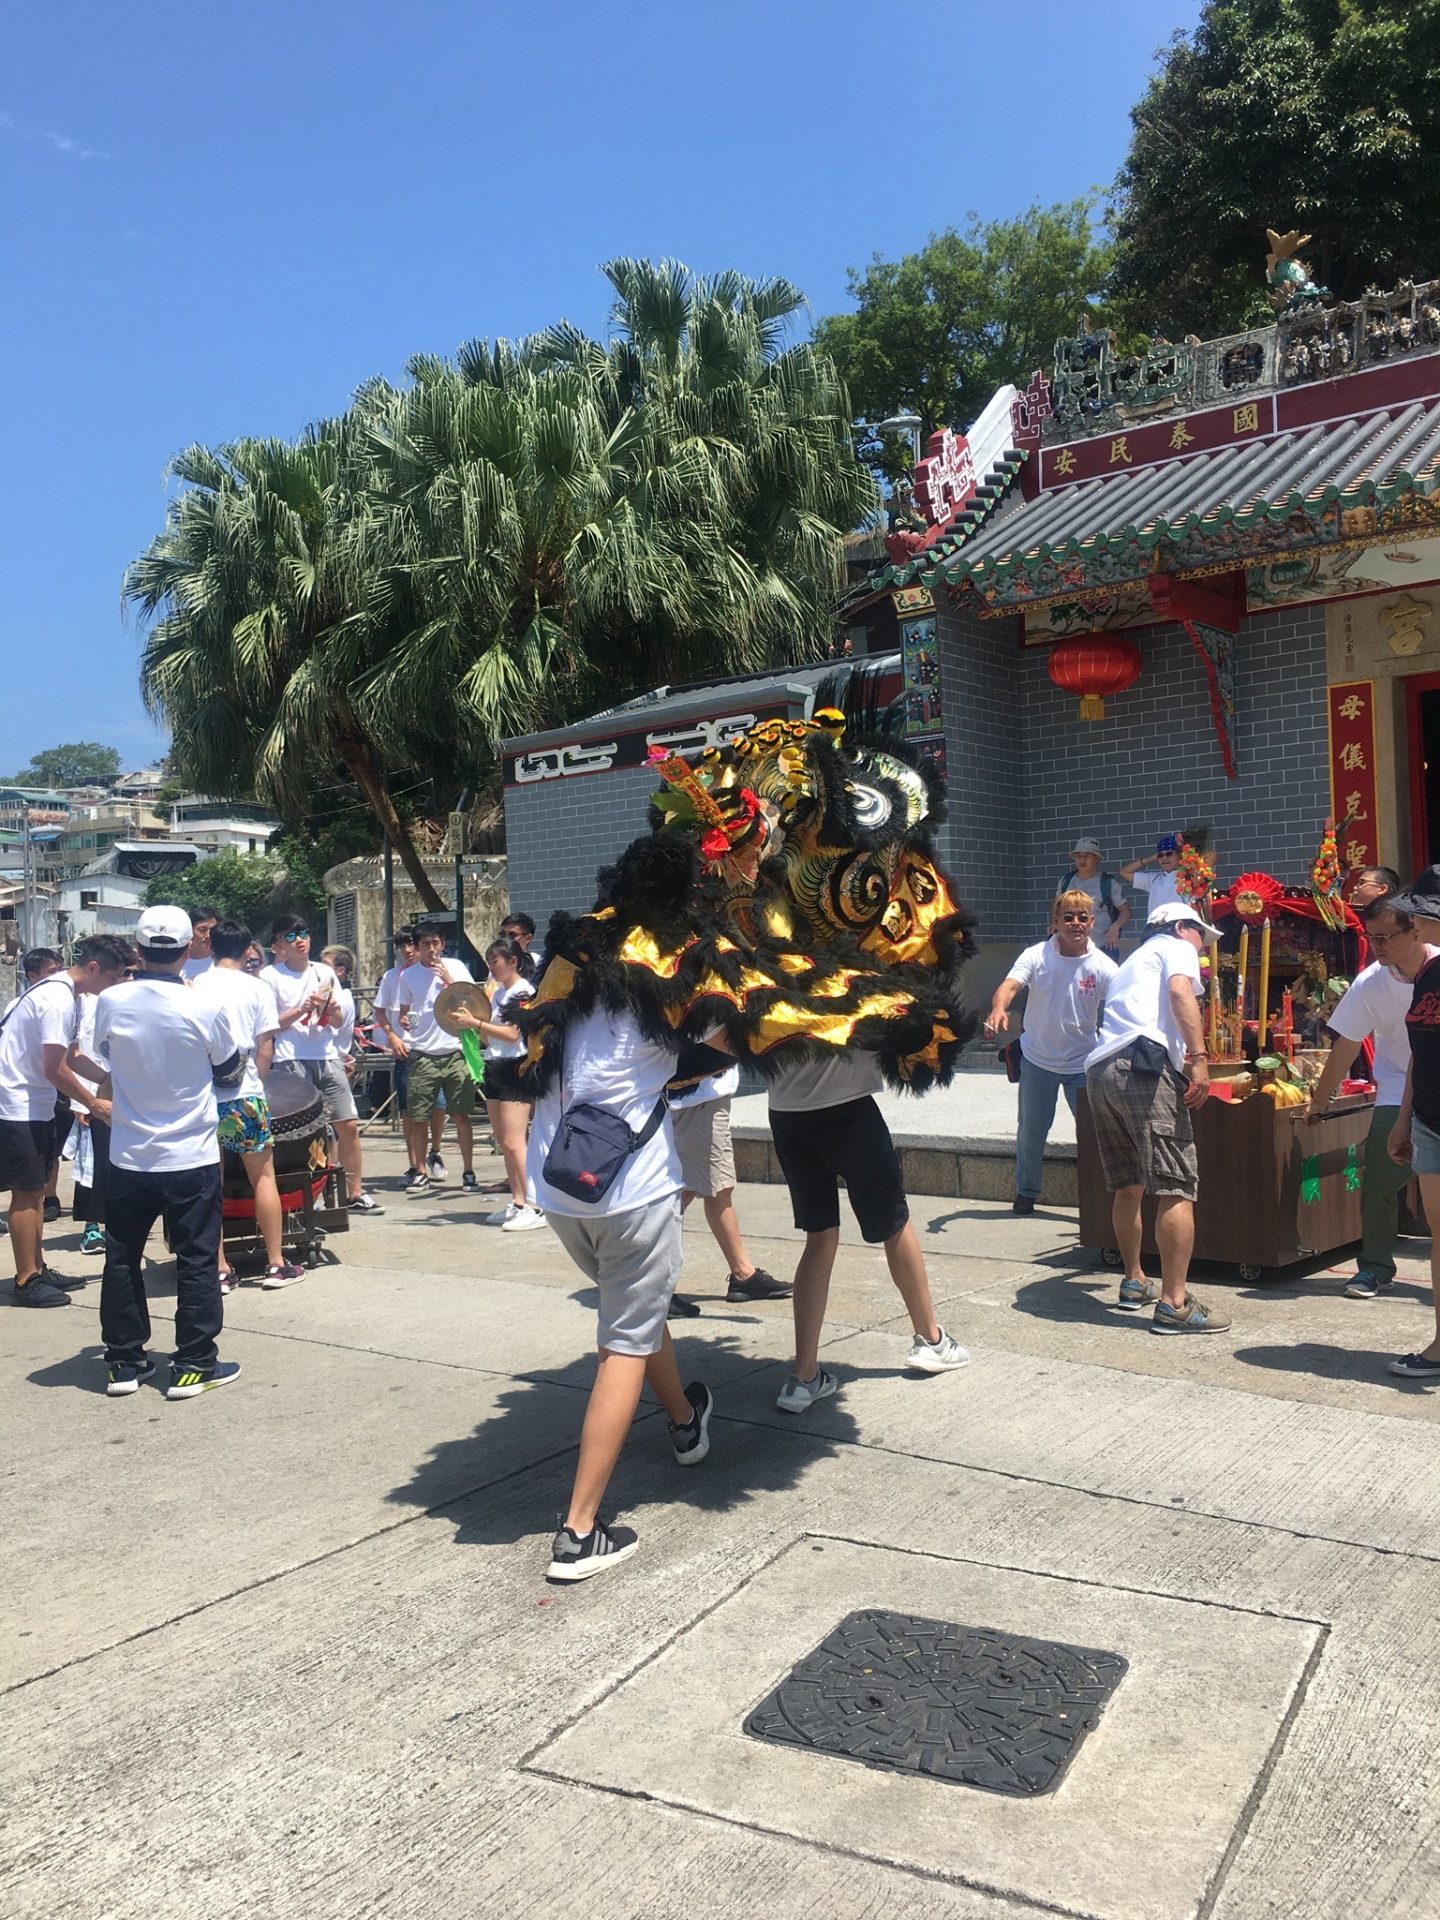 Things to do in Hong Kong, Cheung Chau festival